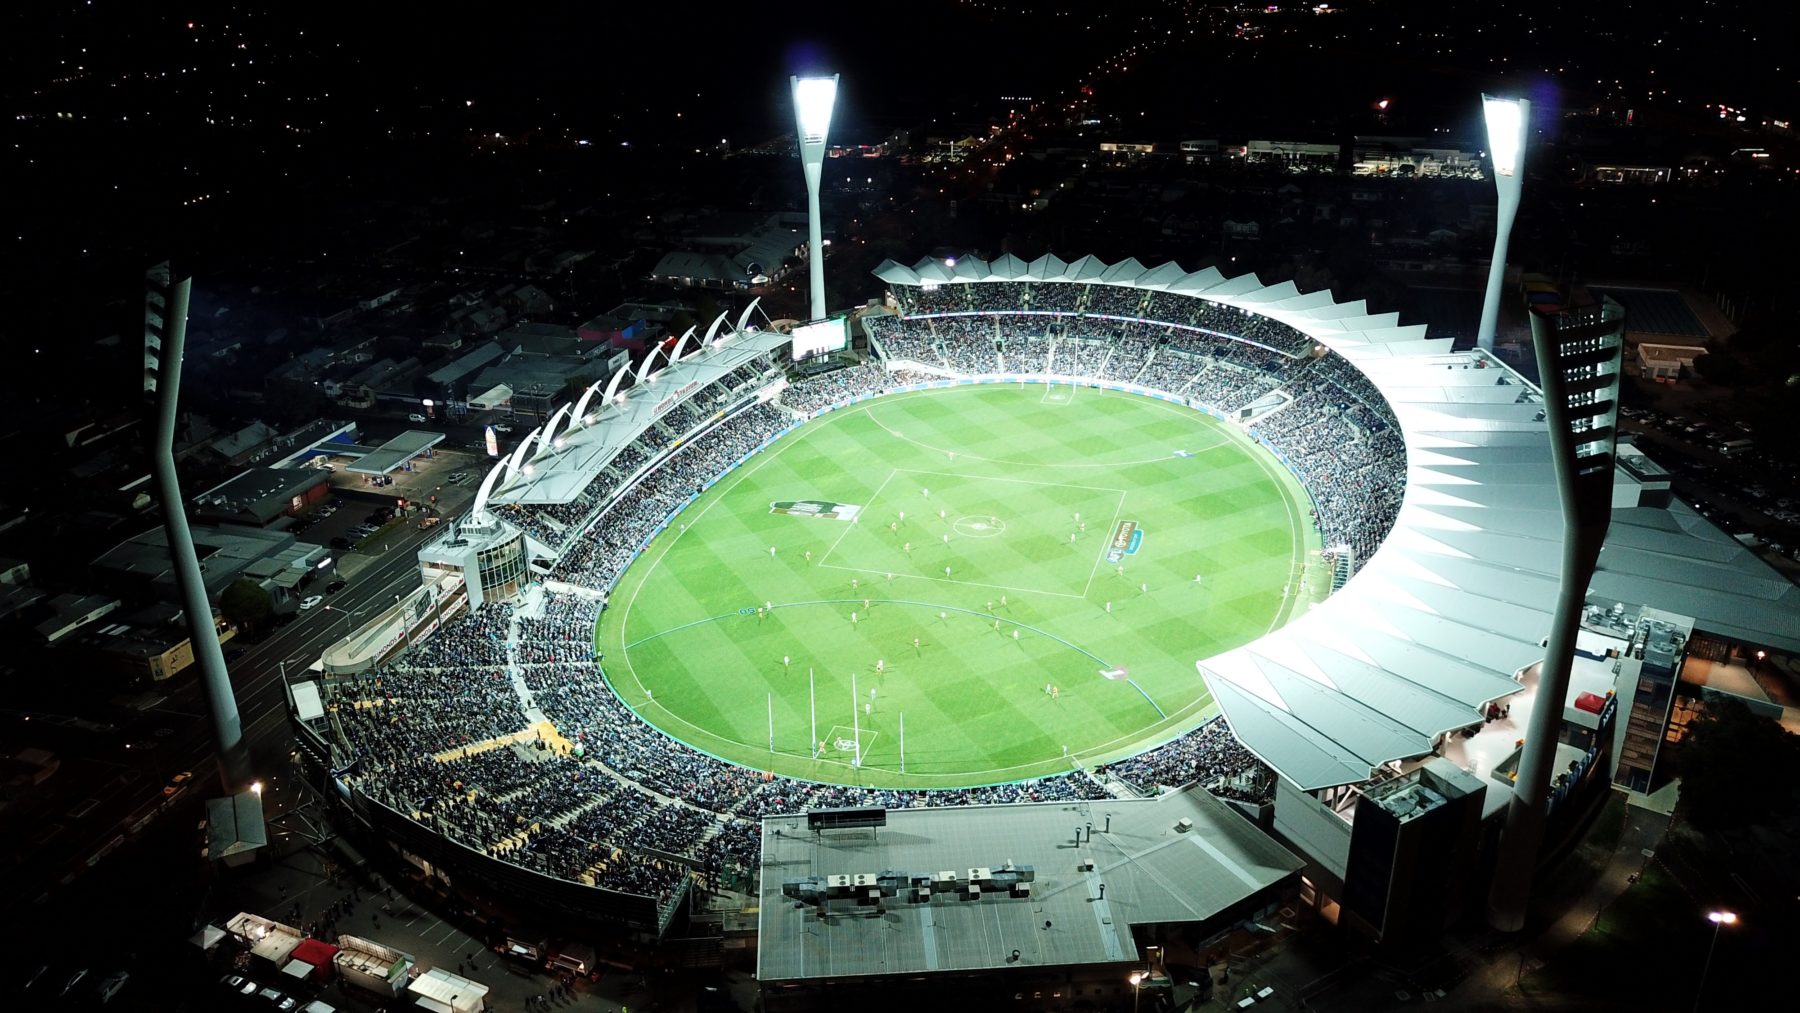 GMHBA stadium in Geelong, Victoria.